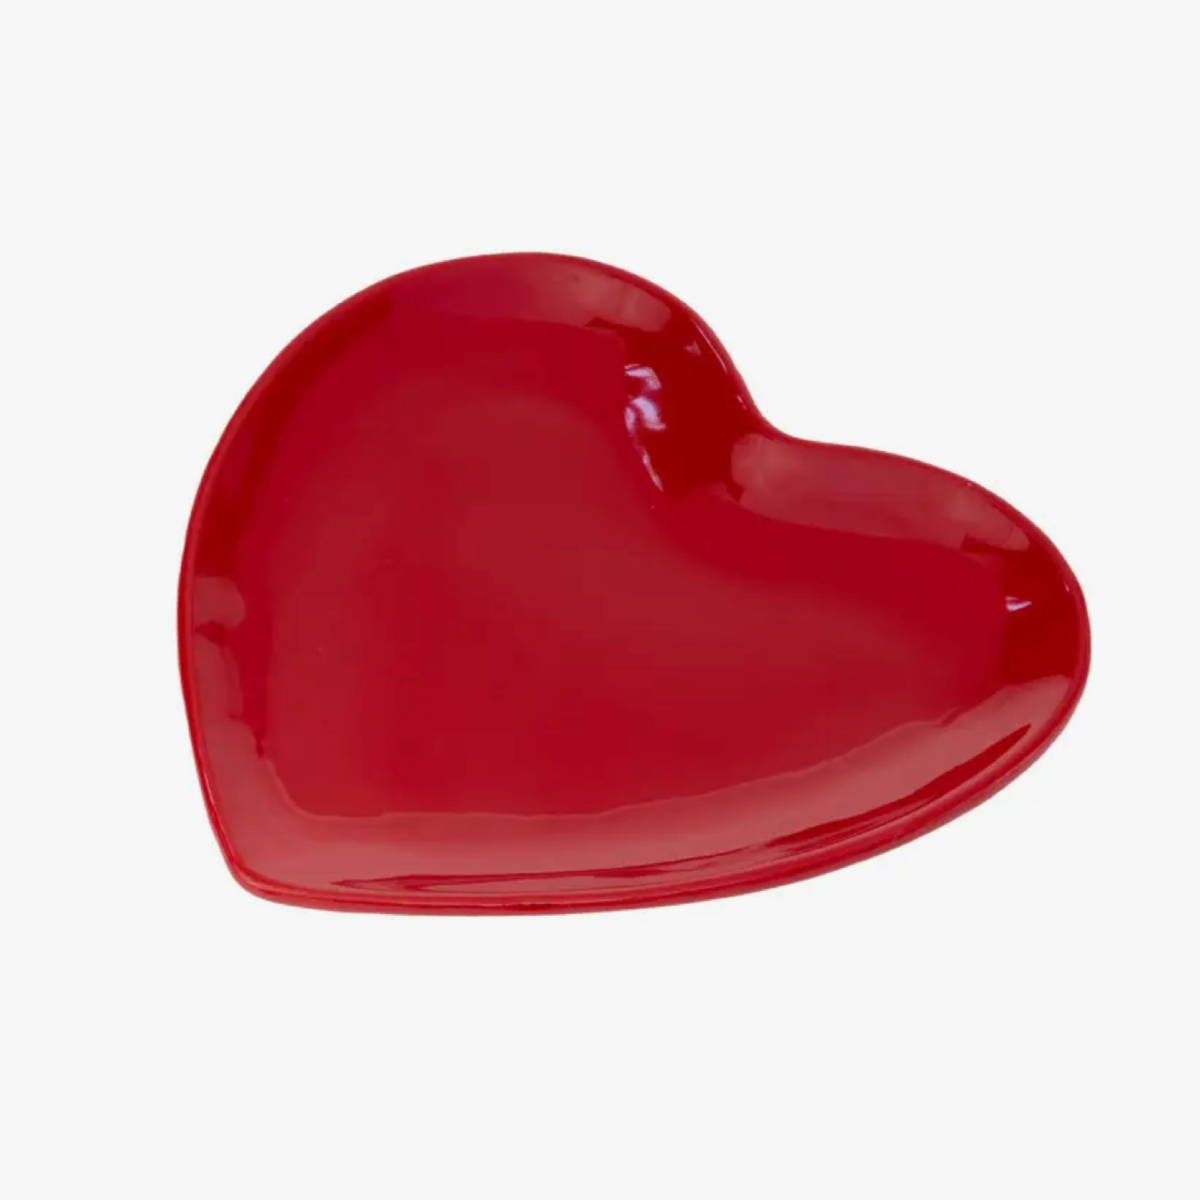 Red Heart Ceramic Plate